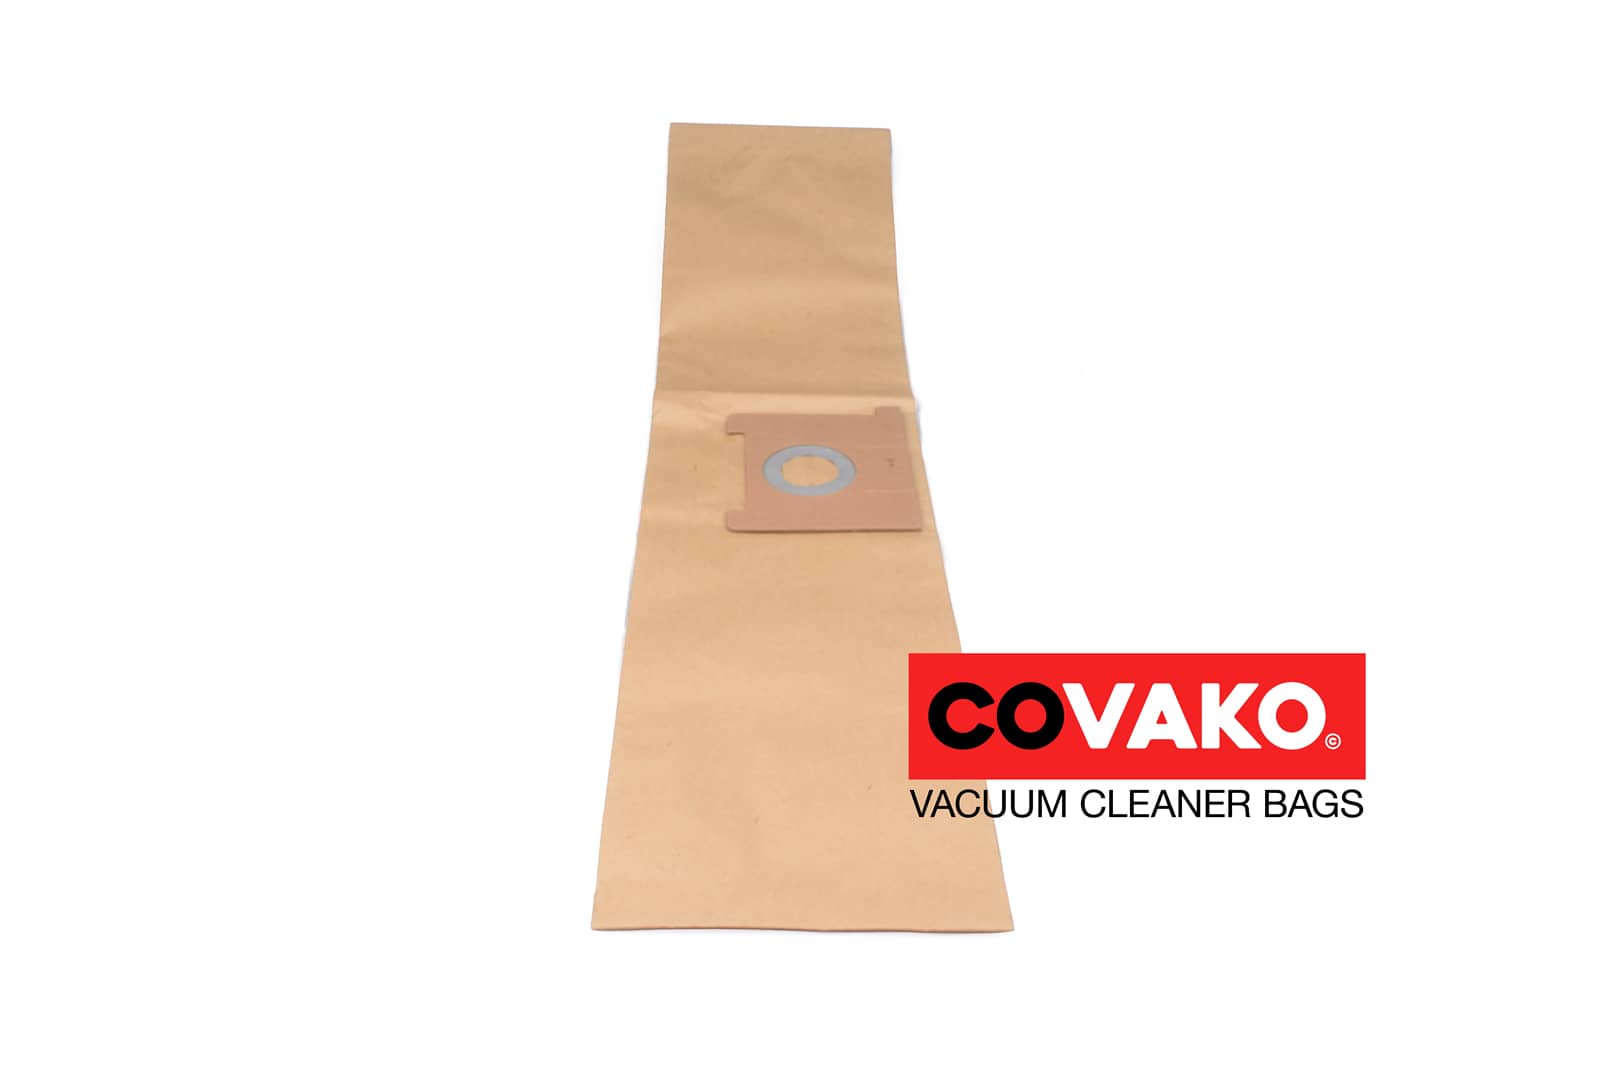 Clean a la Card K1022009480 / Paper - Clean a la Card vacuum cleaner bags